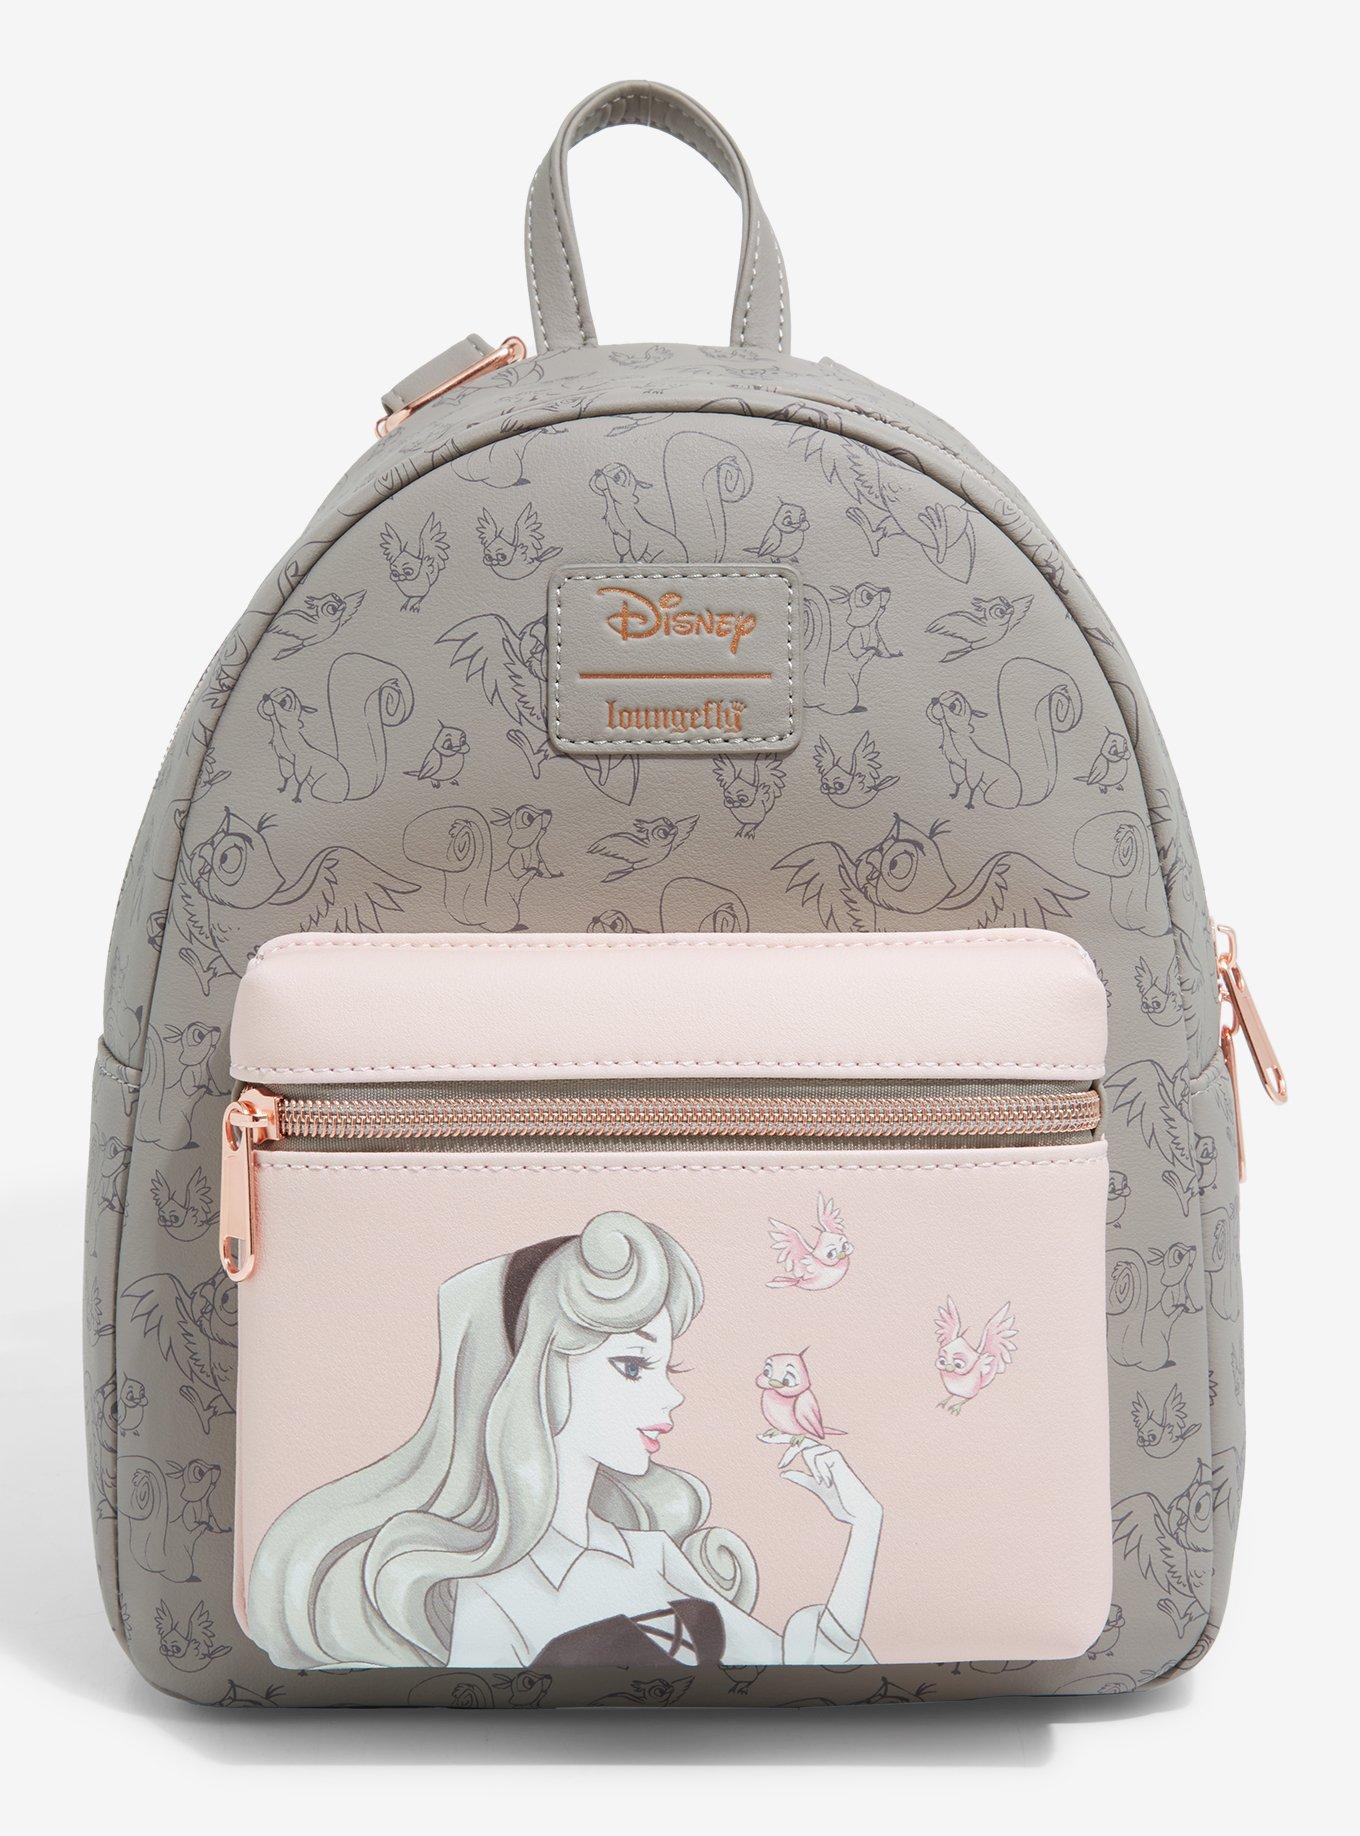 Disney Sleeping Beauty Pin Trader Backpack at Loungefly - Disney